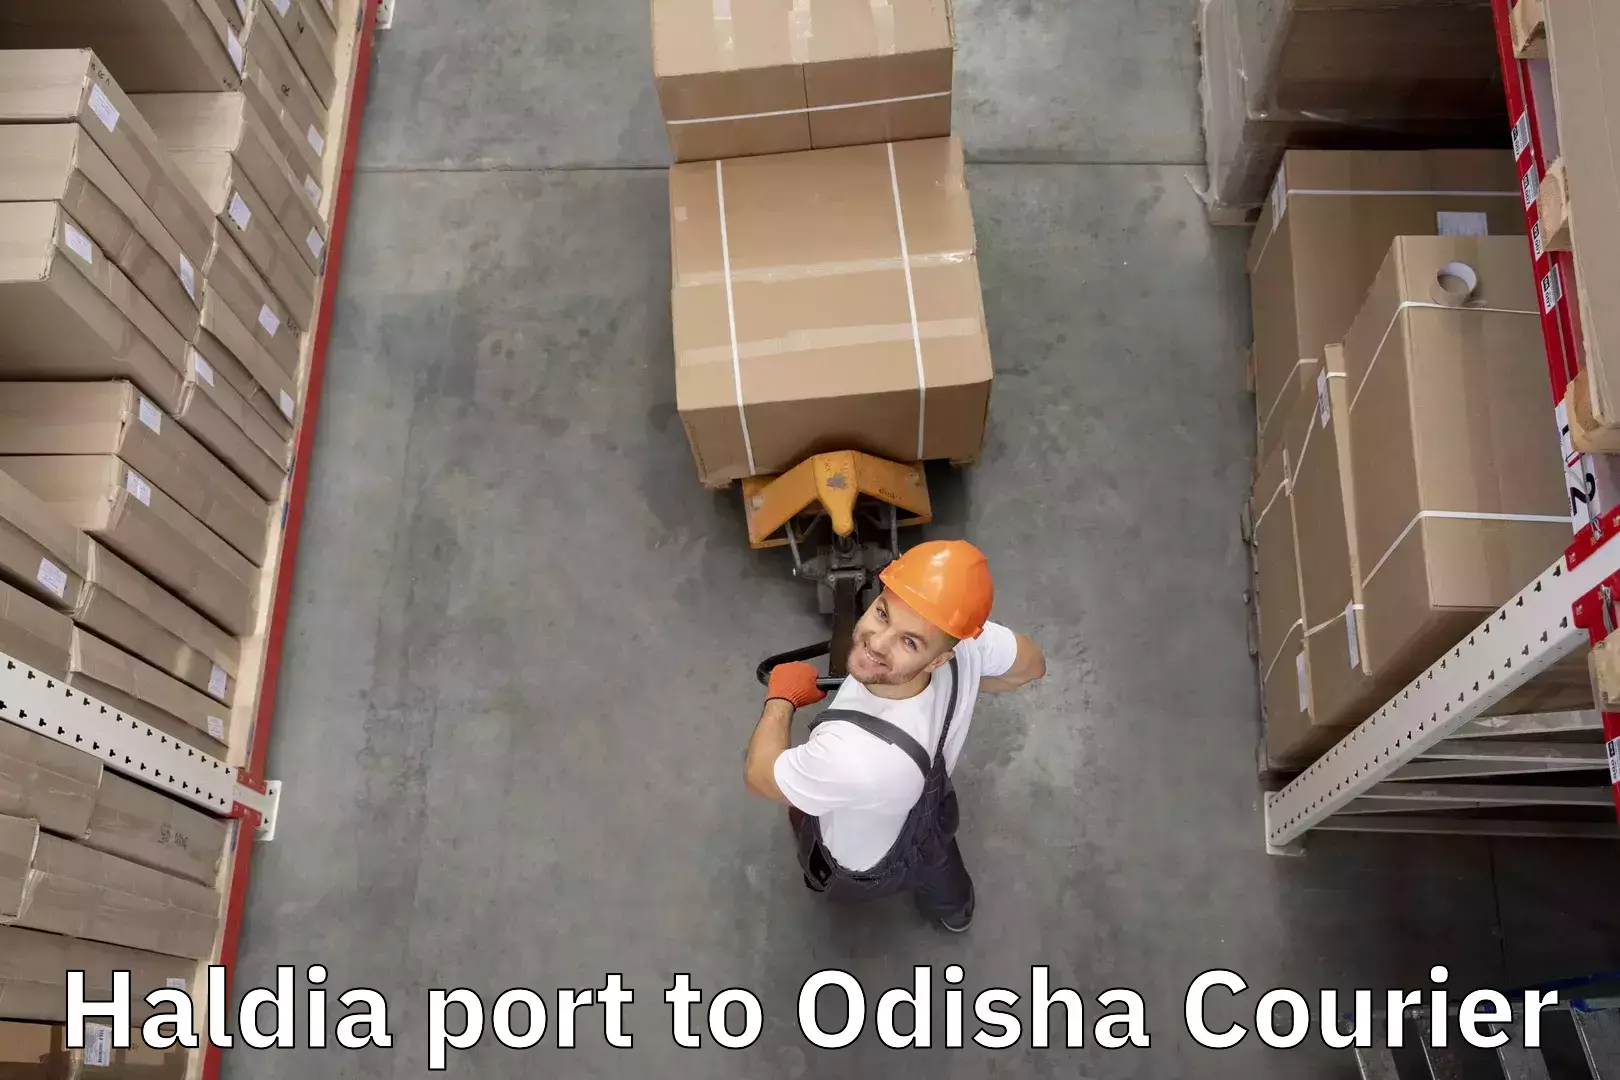 Luggage transport consultancy Haldia port to Odisha